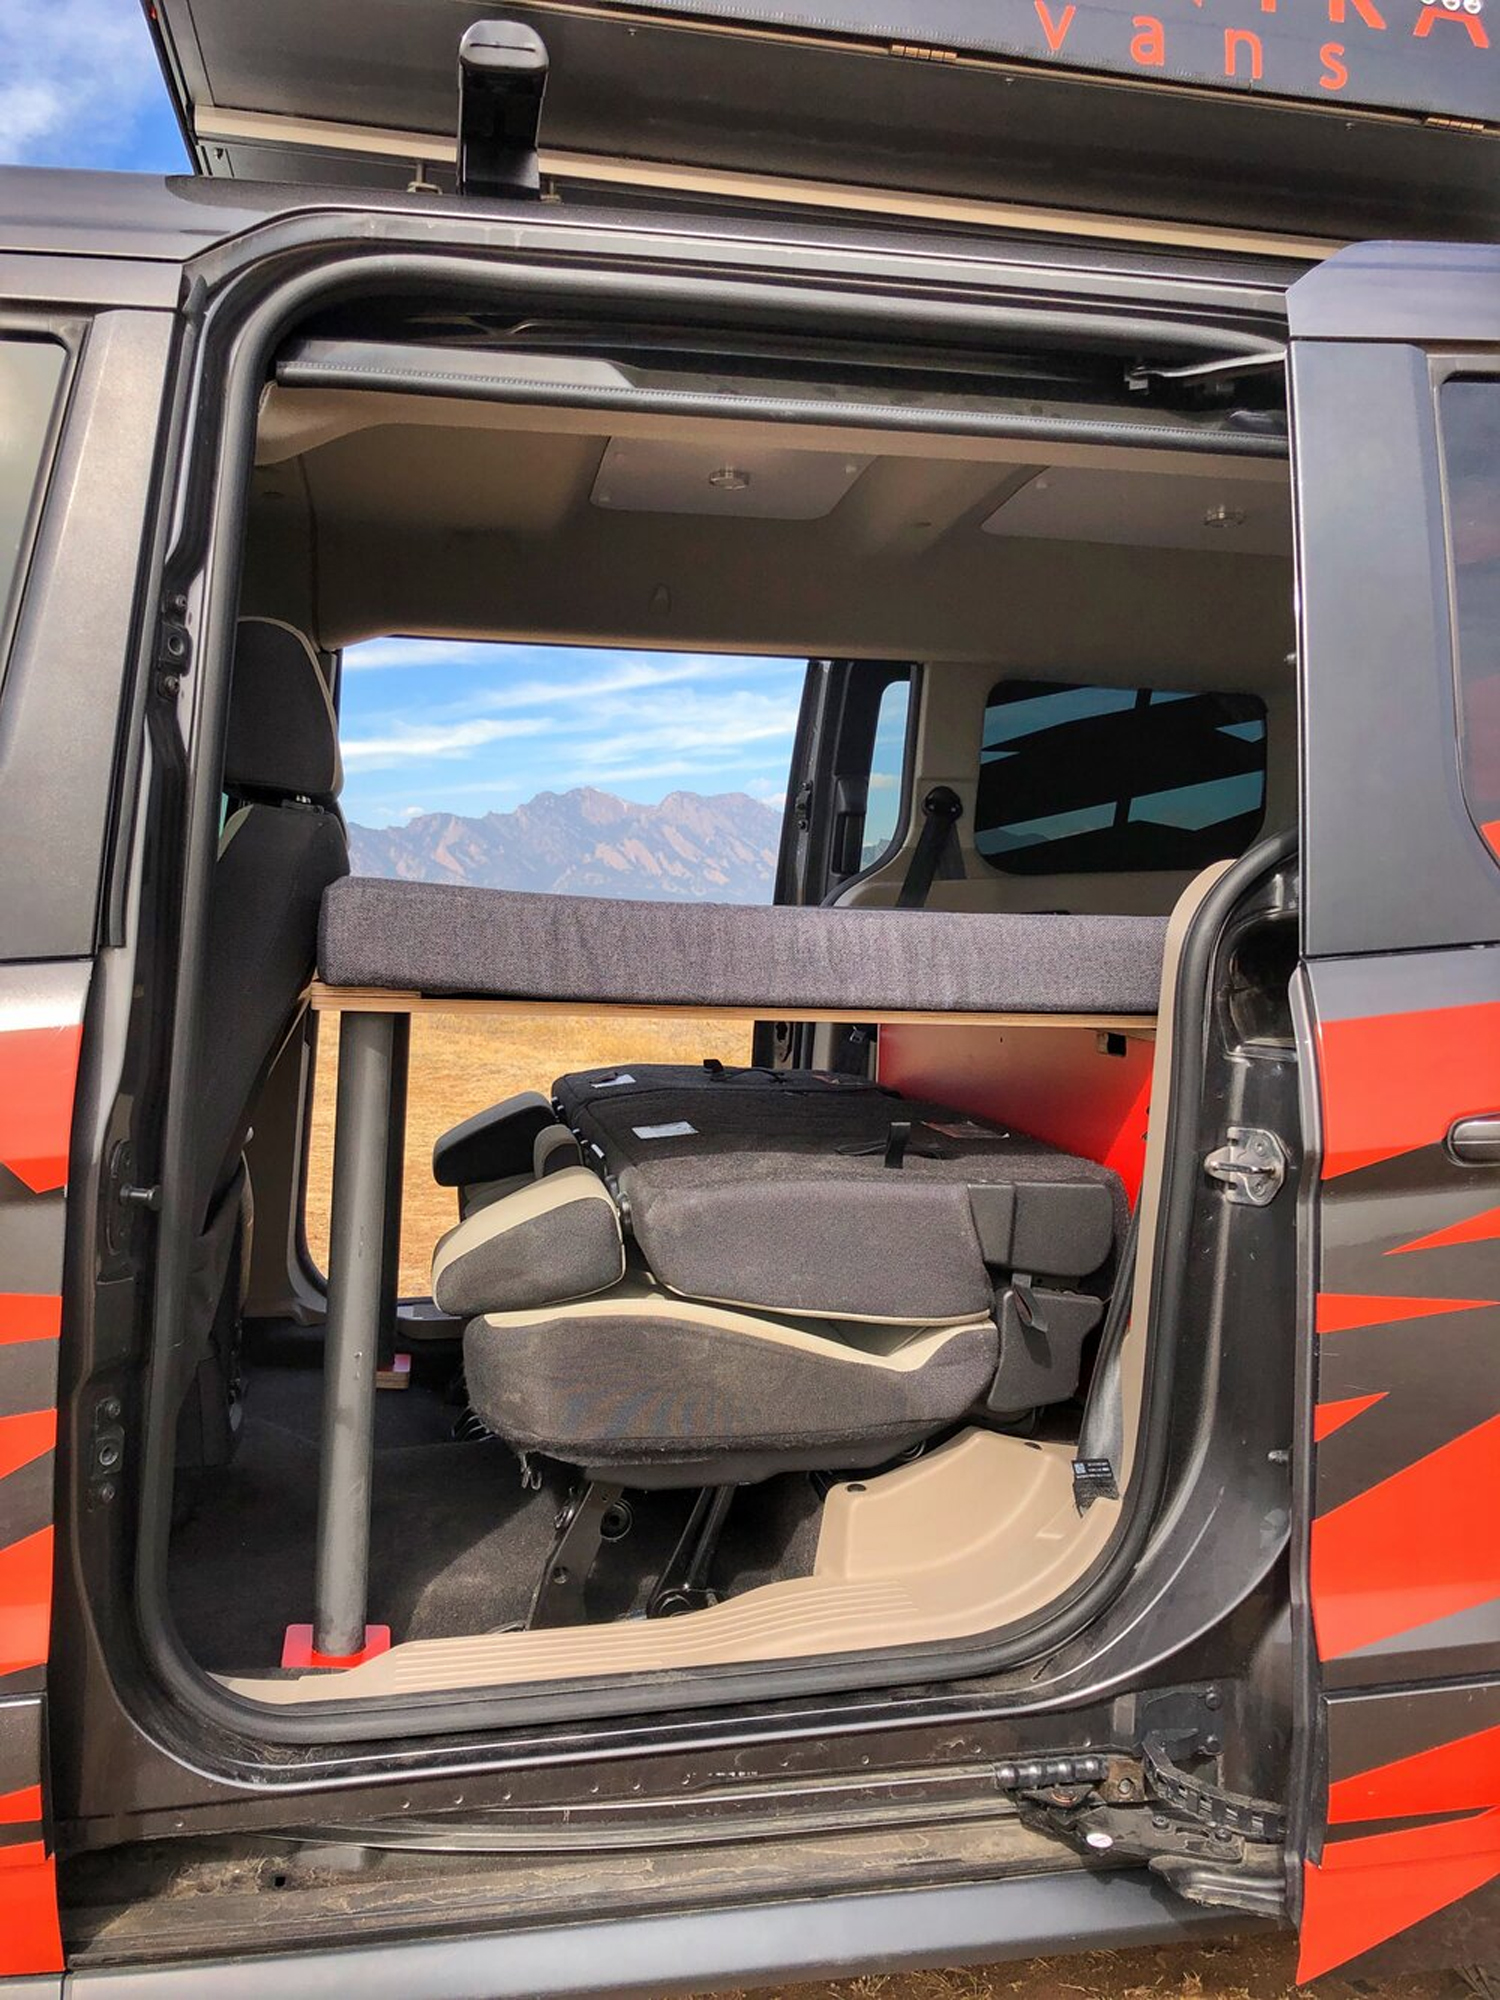 Contravans Ford Transit Connect Camper Van Starts At $14,698